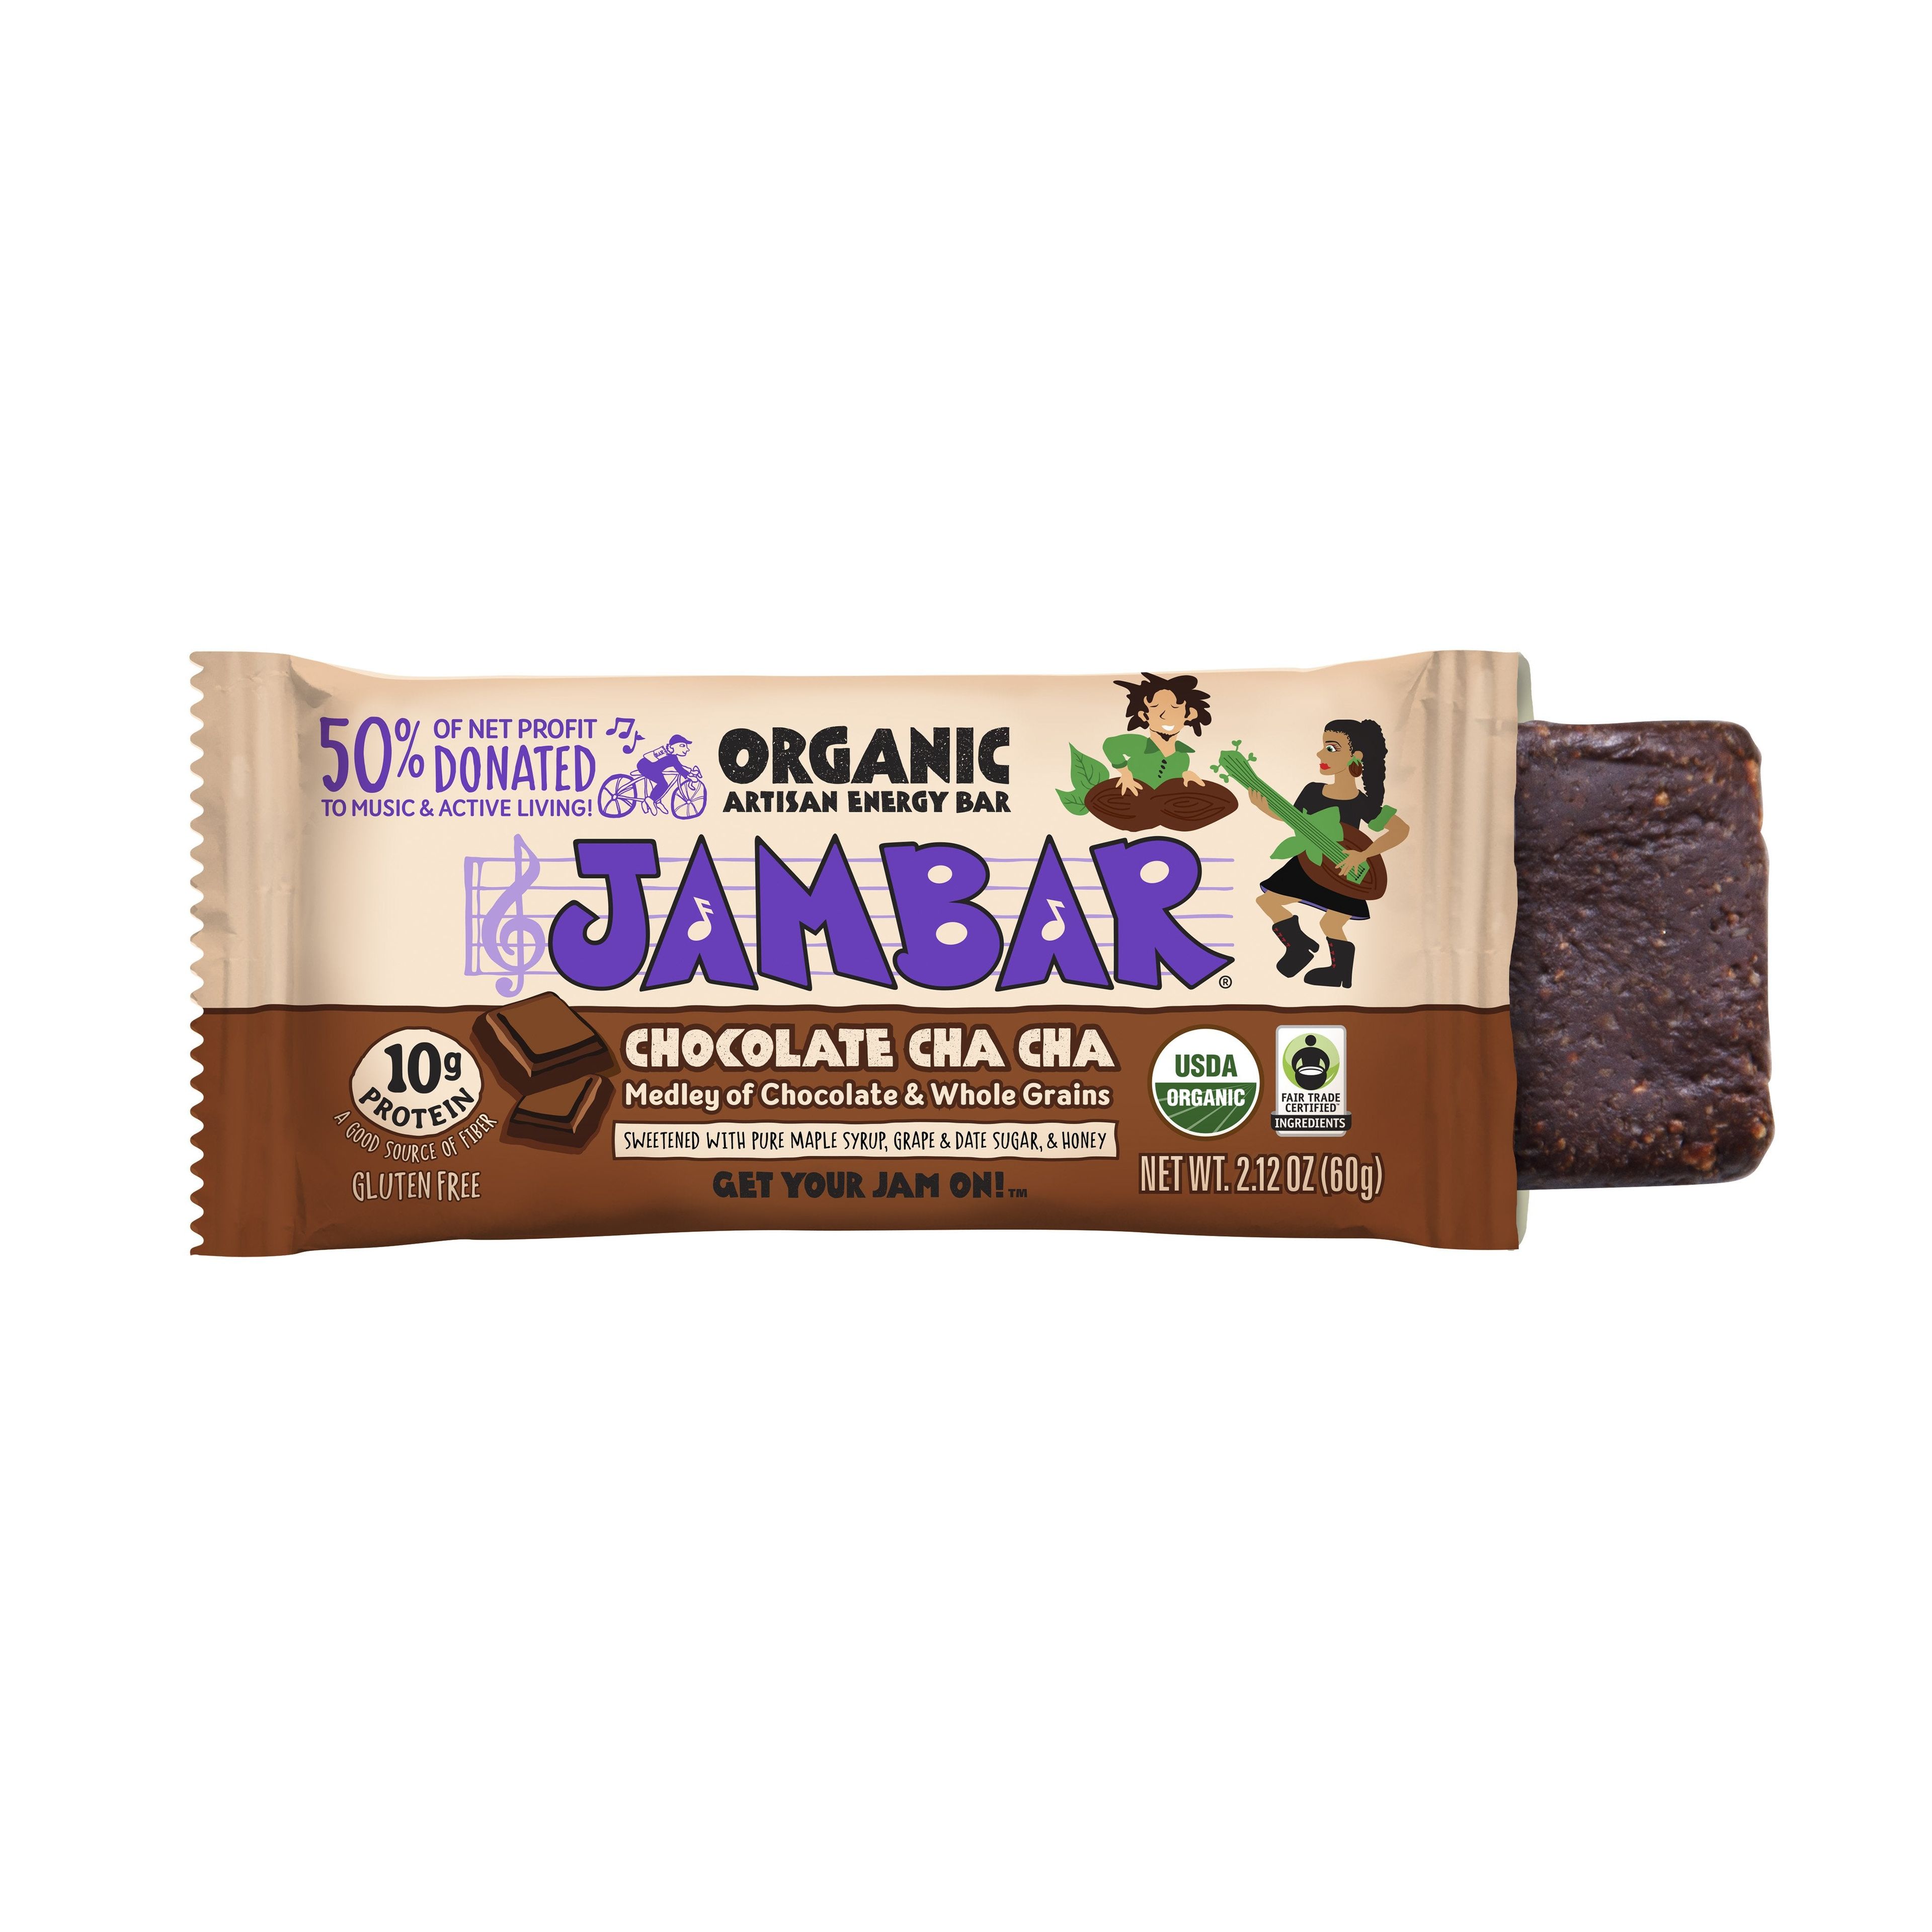 www.jambar.com/products/48-bar-case-chocolate-cha-cha